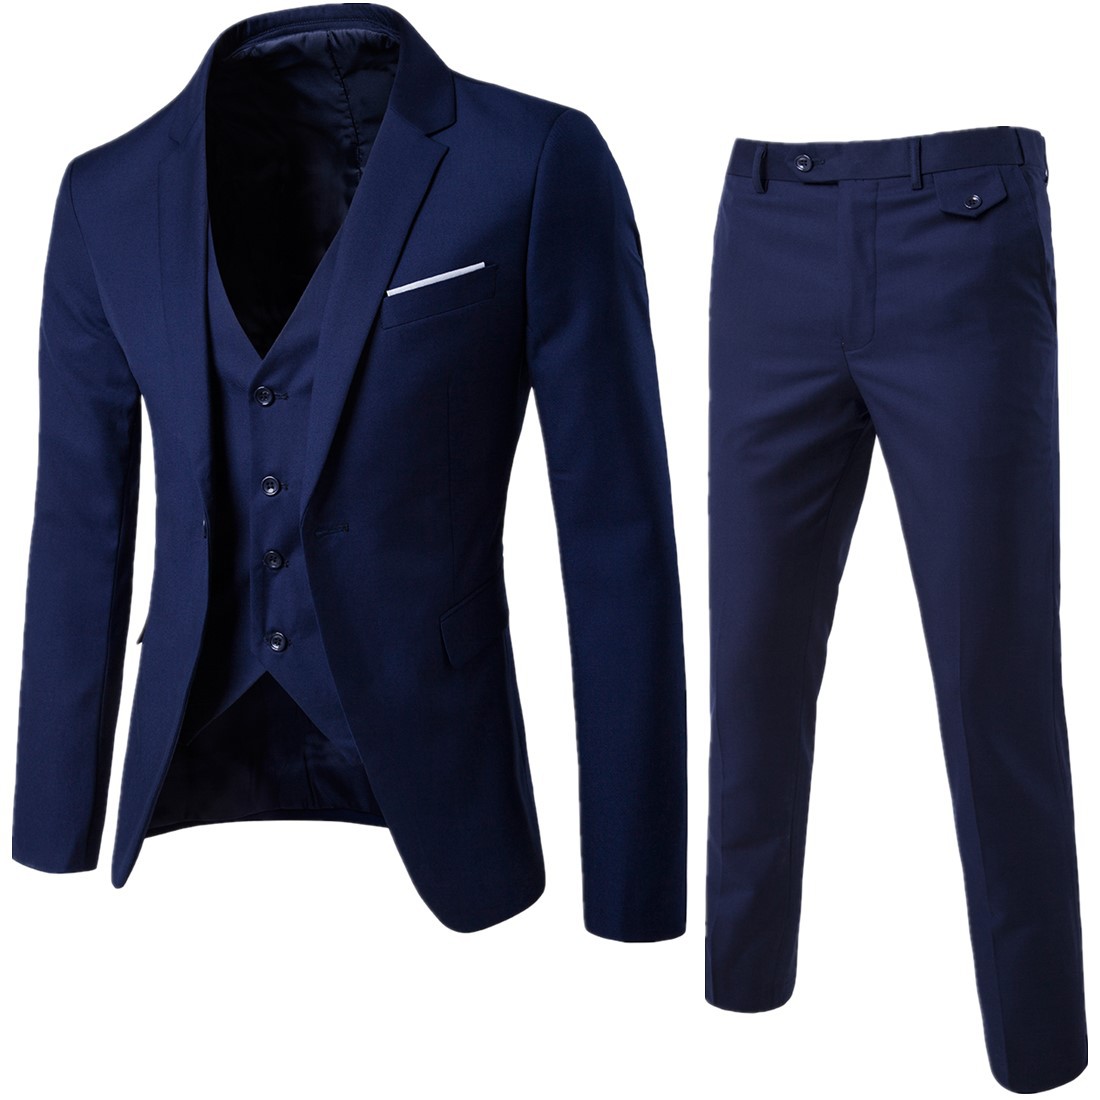 2018 new men's business leisure three piece suit coat bridegroom best man wedding large one button suit